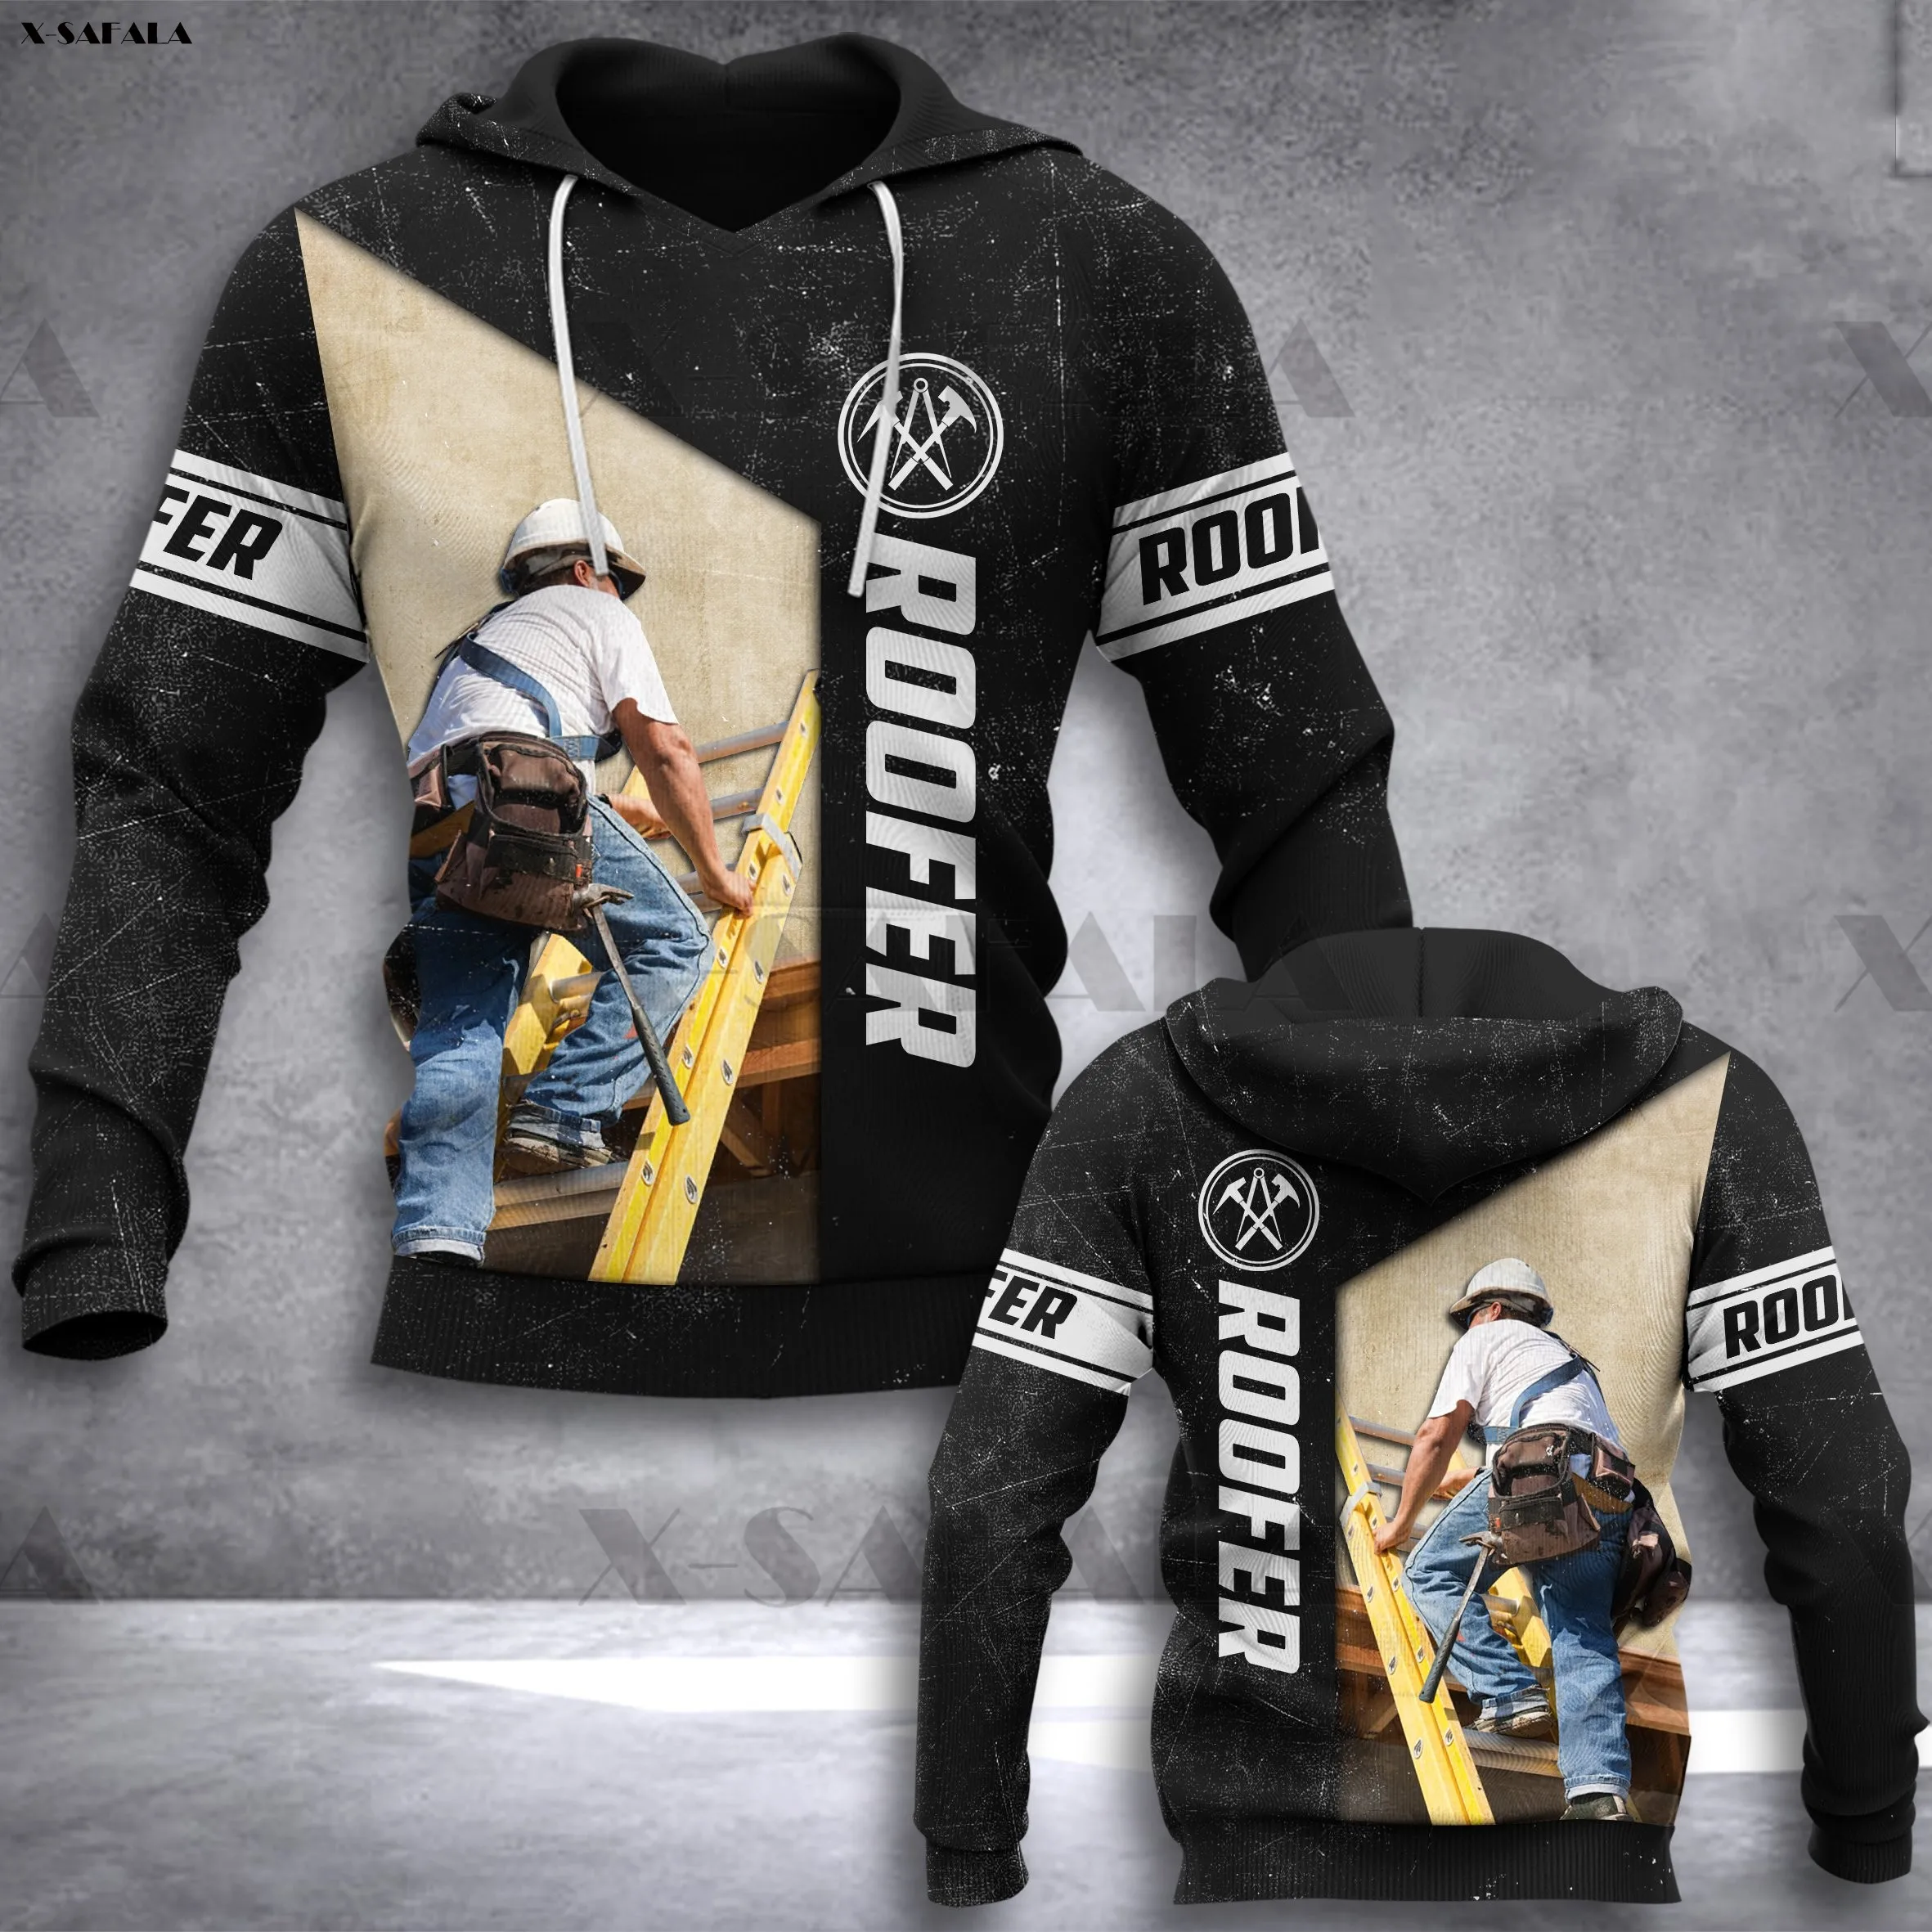 

ROOFER Flash Worker Job Uniform Personalized Printed Hoodie Man Female Zipper Pullover Sweatshirt Streetwear Tracksuits Jersey